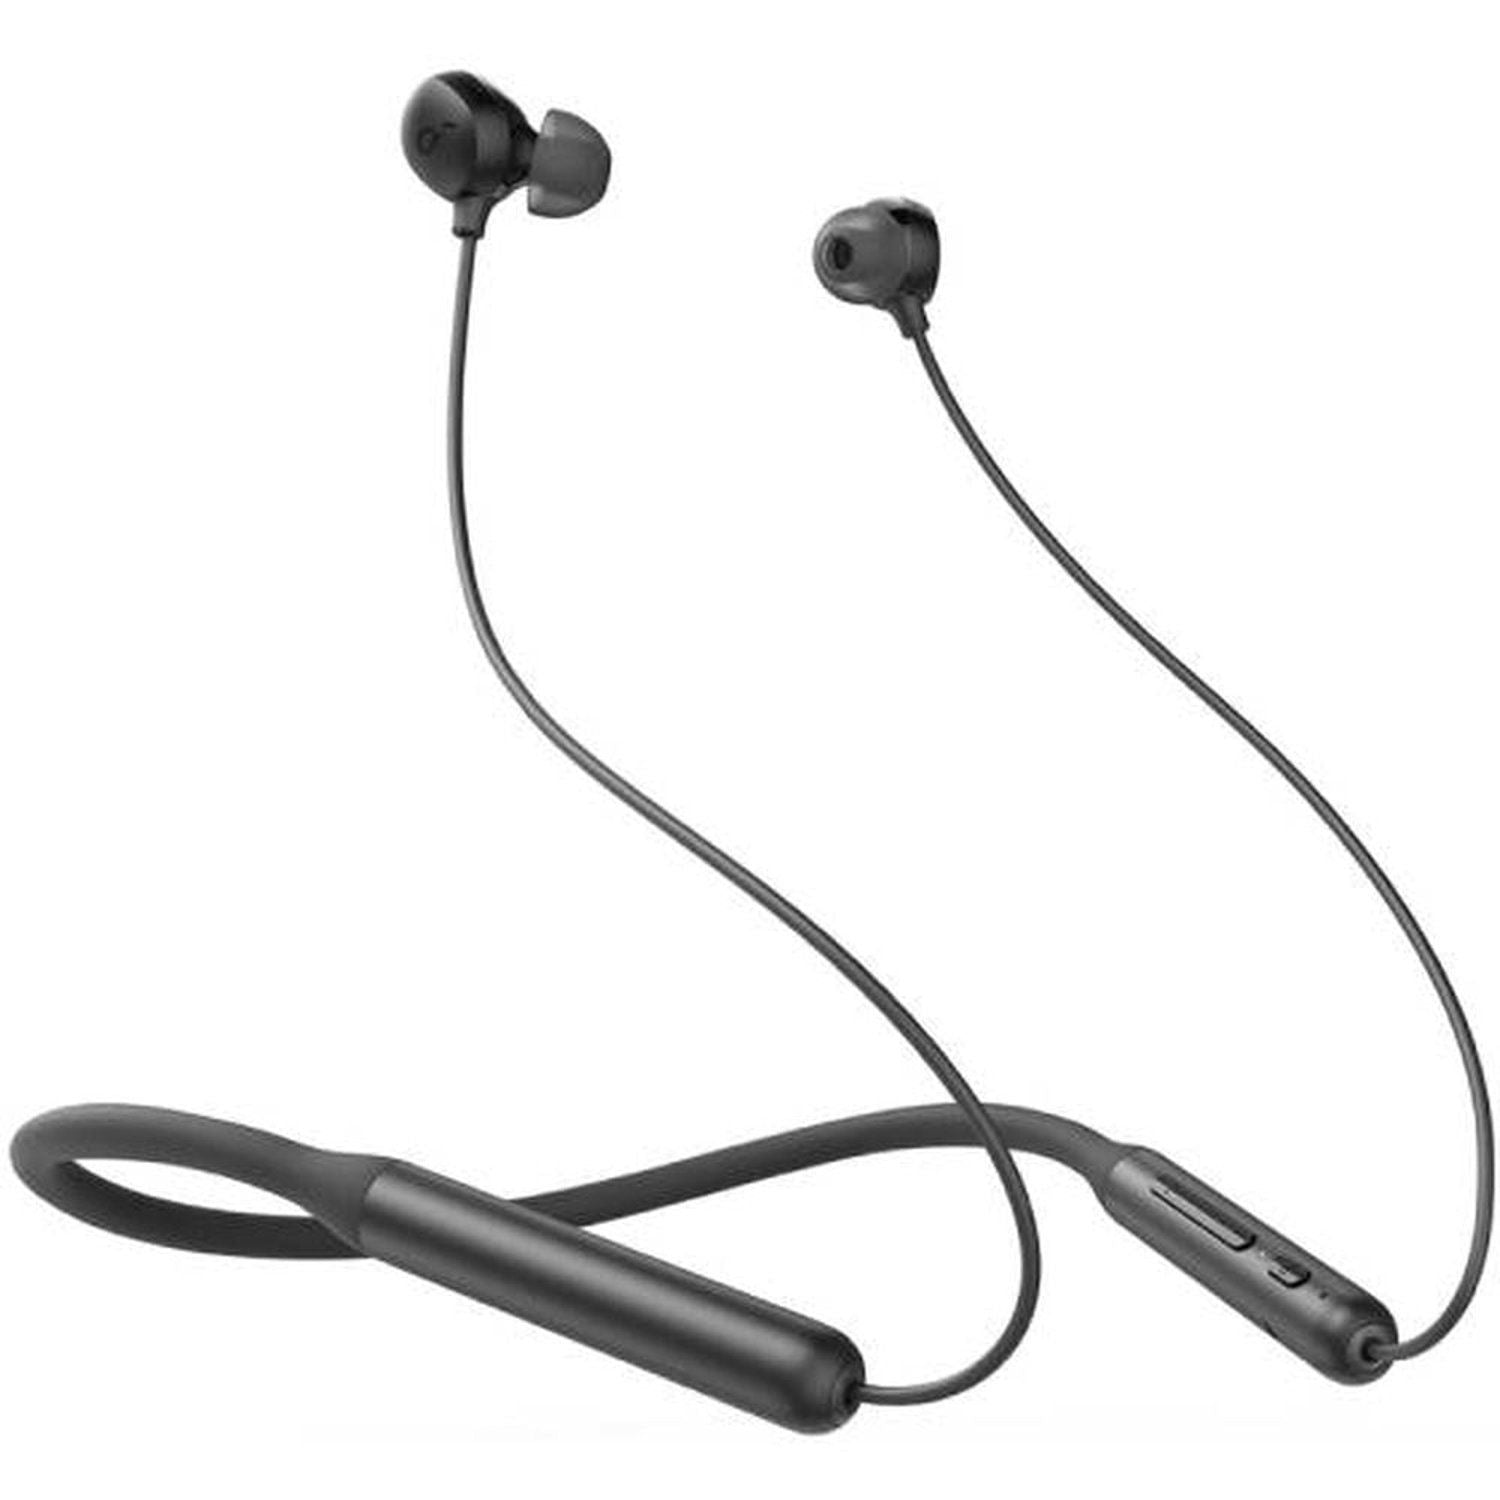 Anker Soundcore Life U2i Wireless Headphones Black | A3213